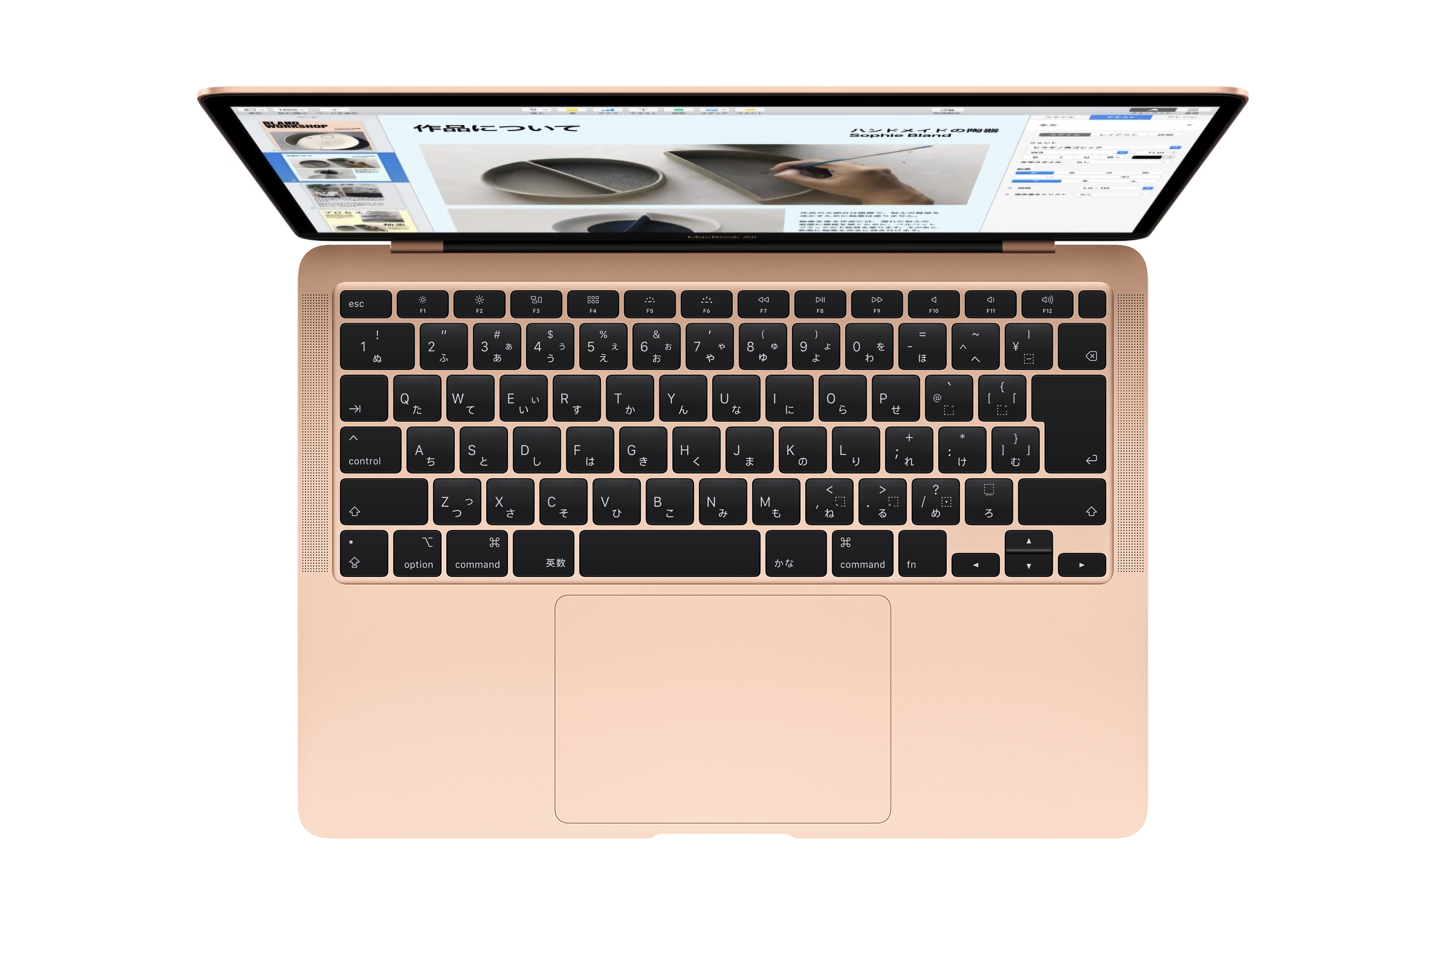 Apple Silicon MacBook Airは安くなる？ 2021年第1四半期までに発売と著名アナリストが予想 - ITmedia NEWS